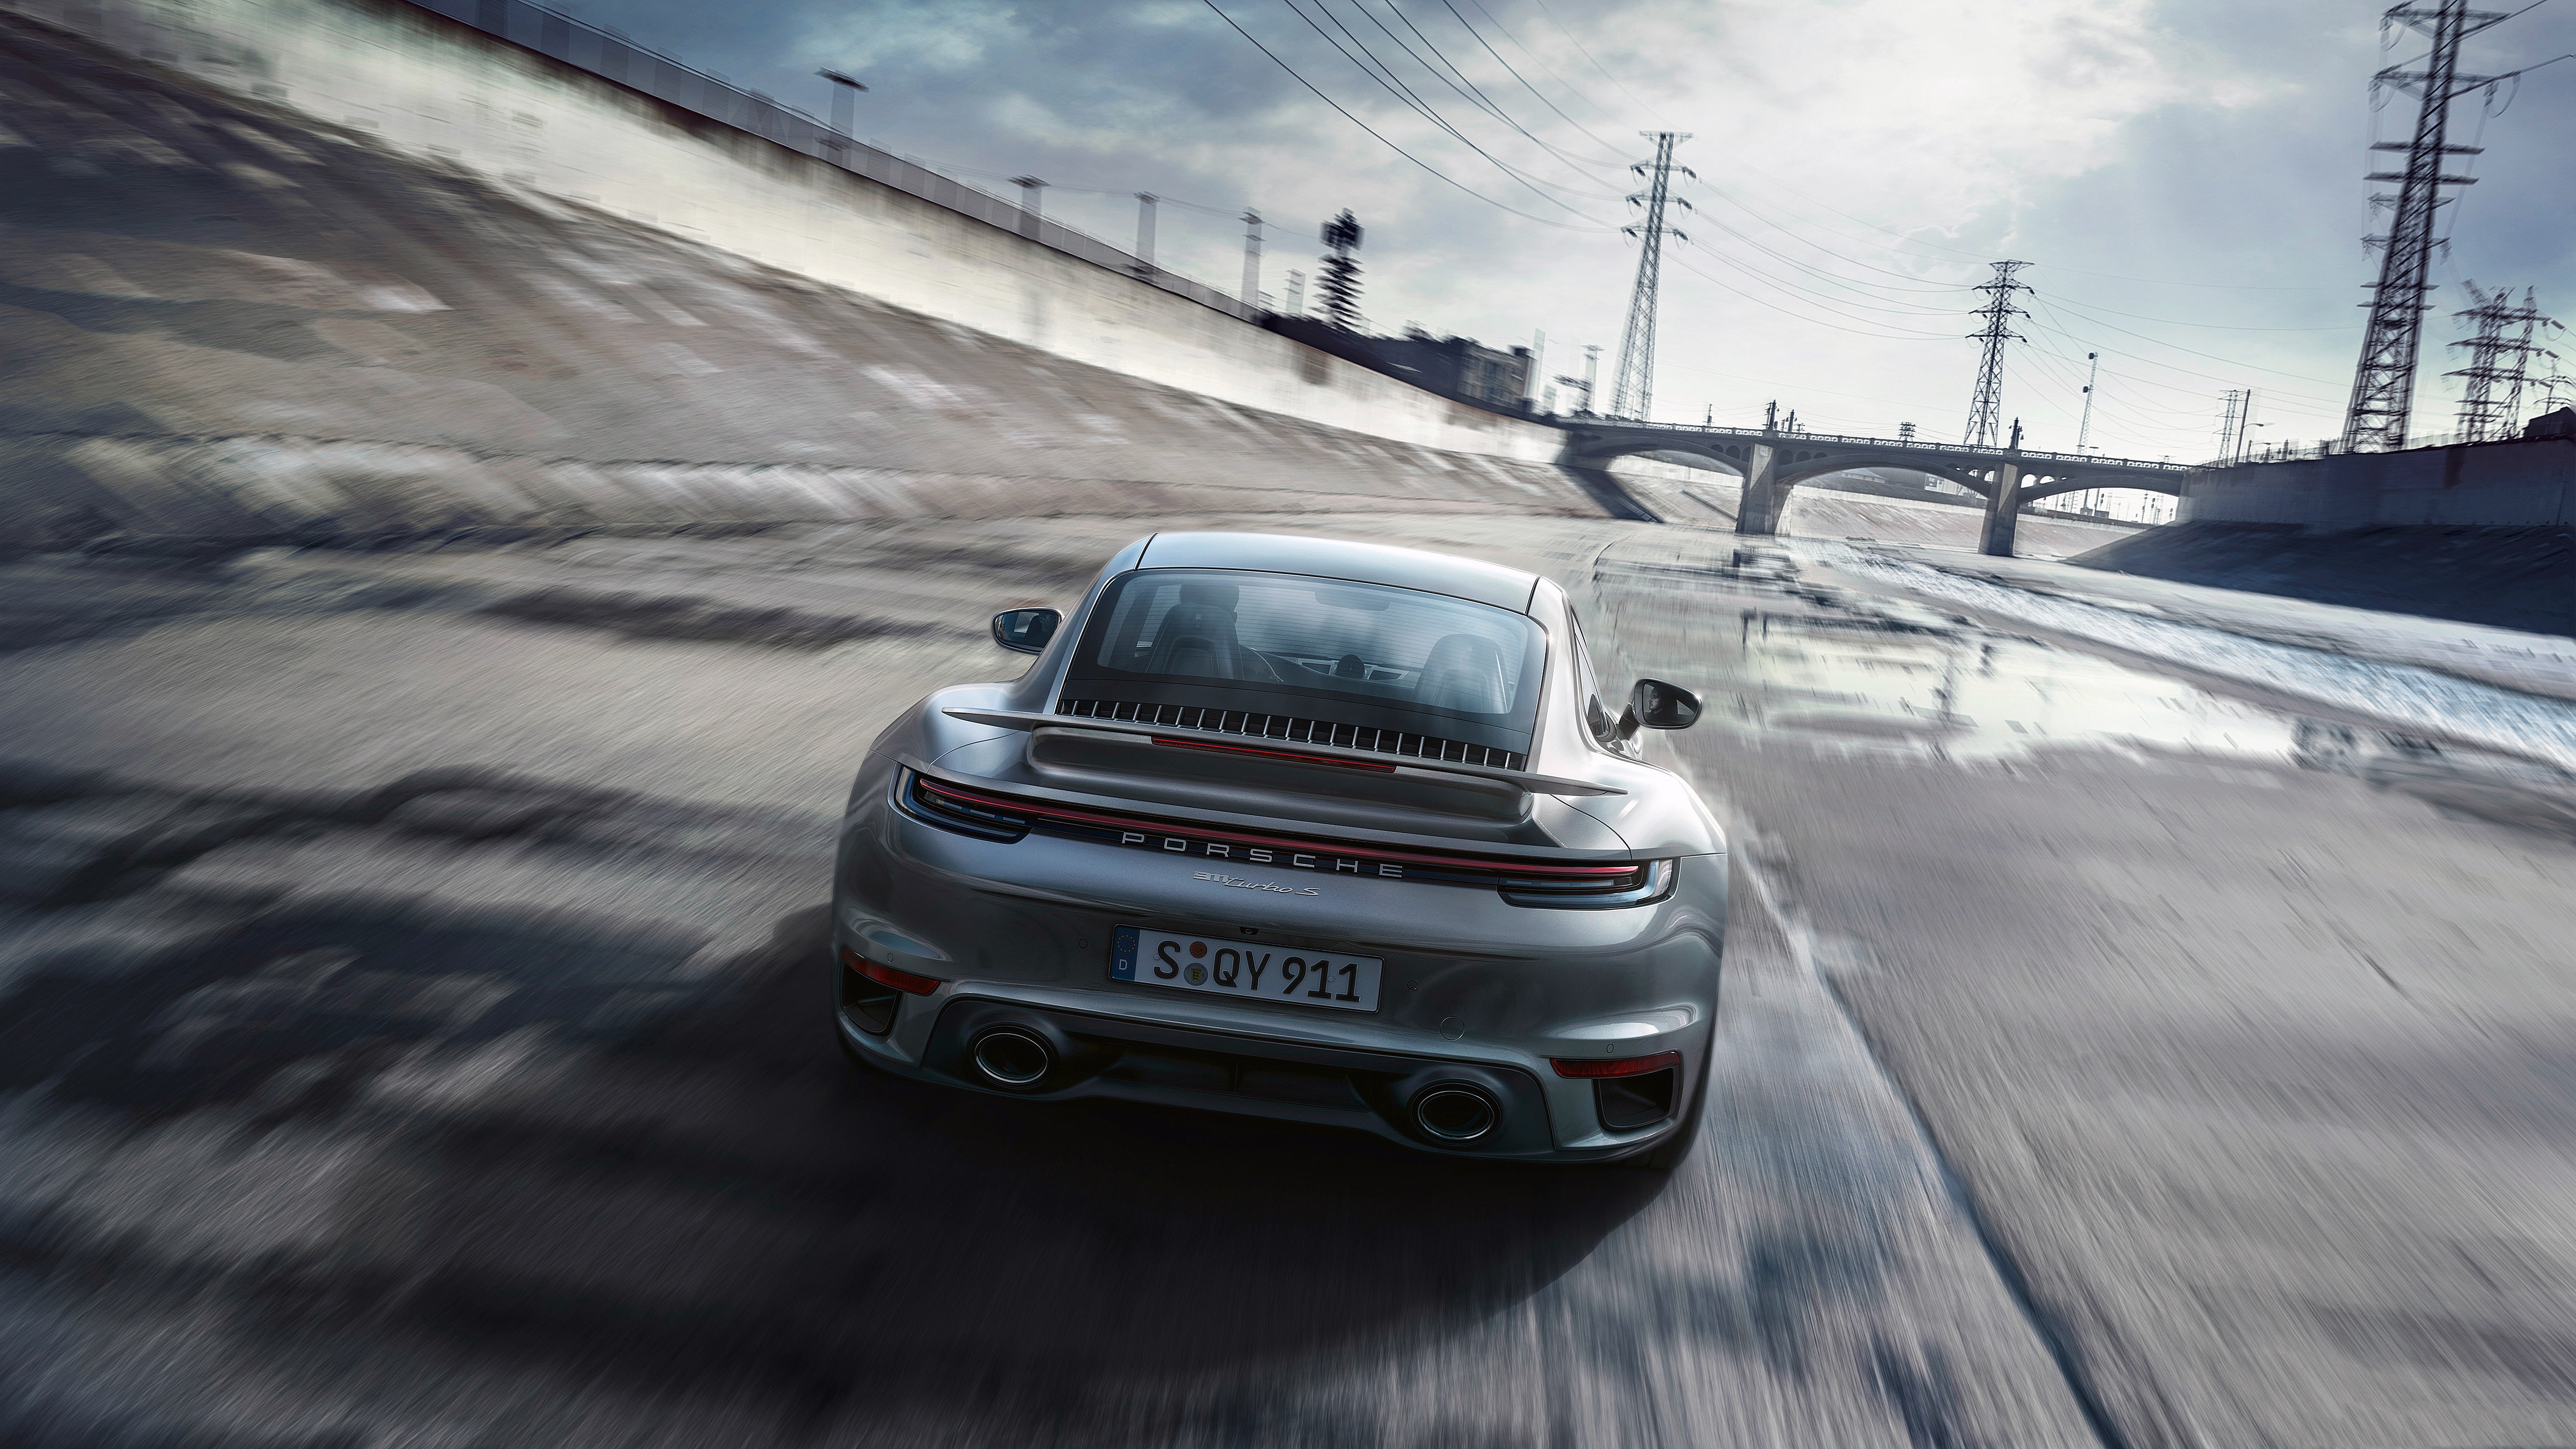 Завантажити шпалери Porsche 911 Turbo S на телефон безкоштовно